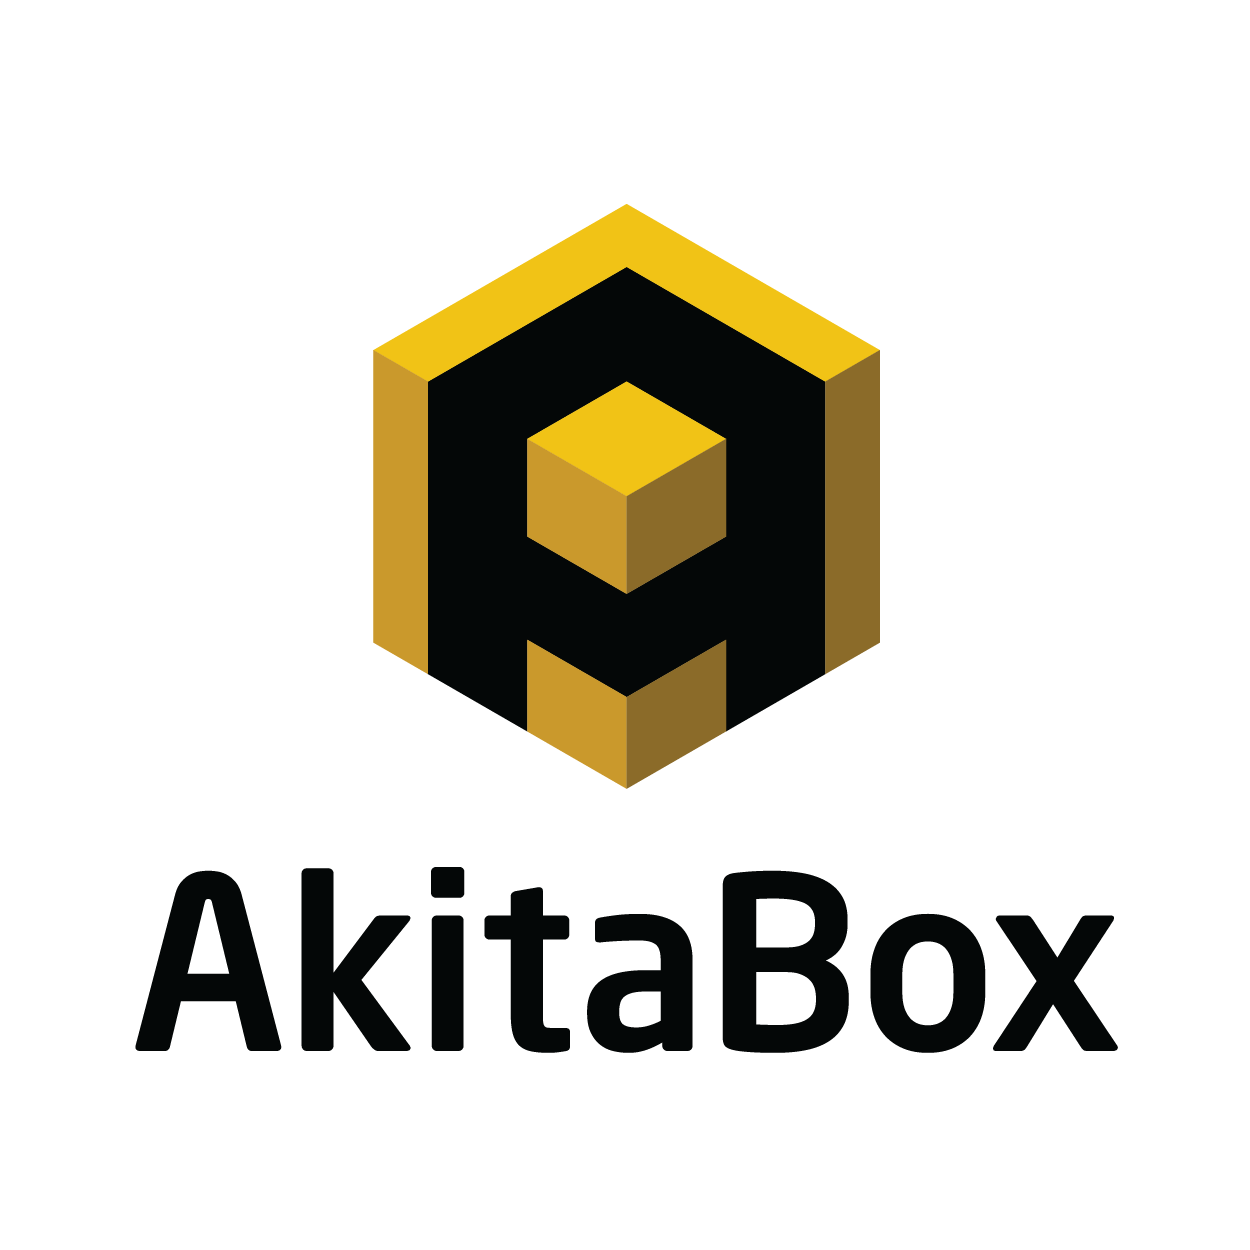 AkitaBox